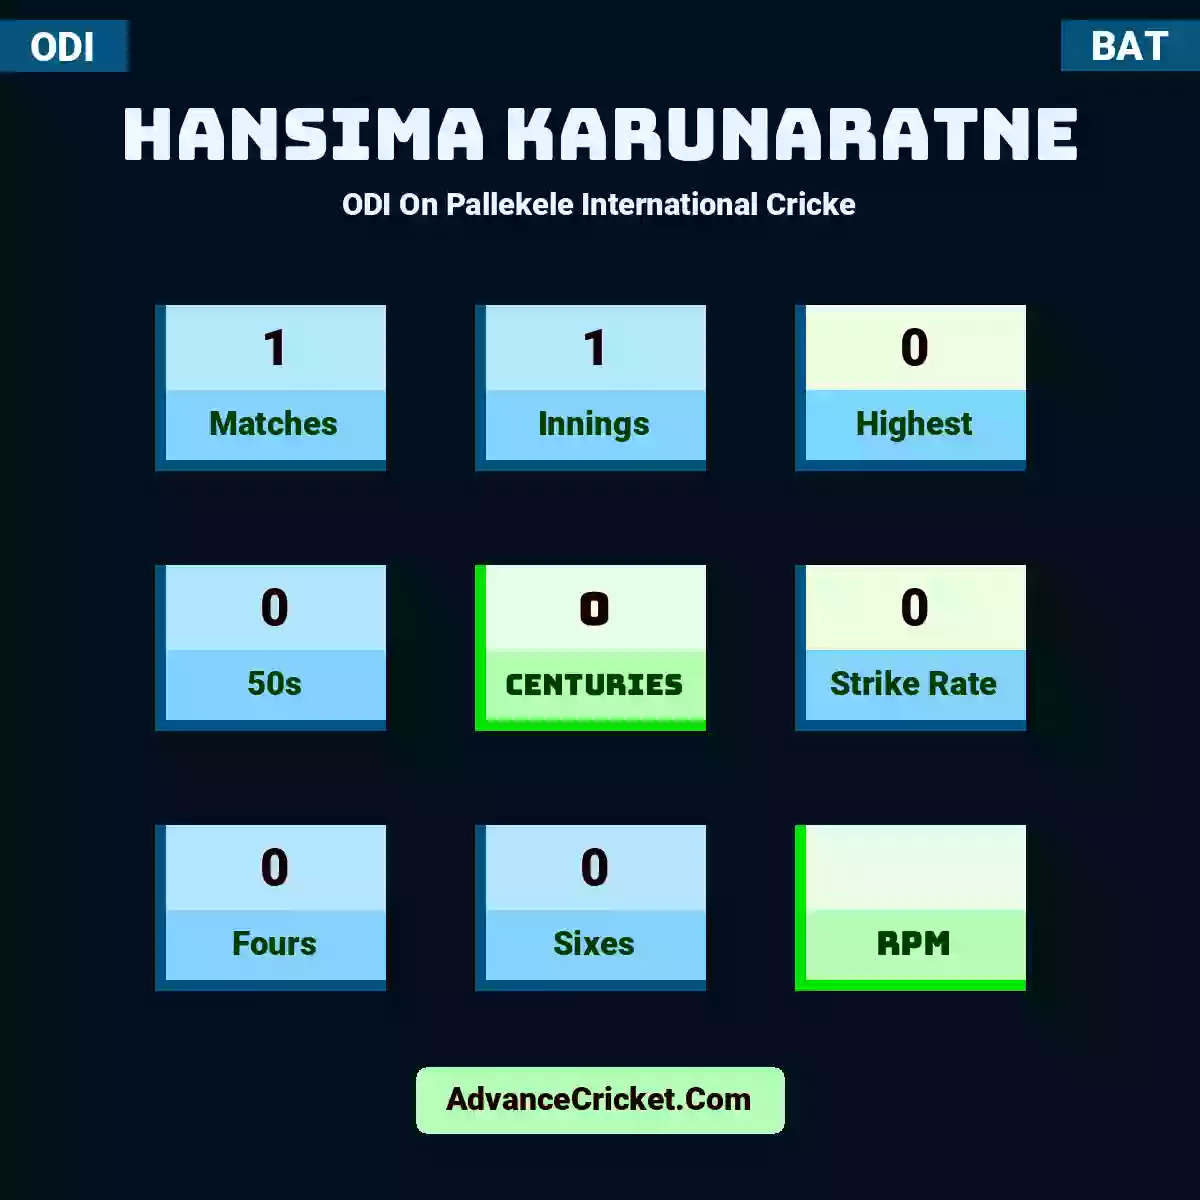 Hansima Karunaratne ODI  On Pallekele International Cricke, Hansima Karunaratne played 1 matches, scored 0 runs as highest, 0 half-centuries, and 0 centuries, with a strike rate of 0. H.Karunaratne hit 0 fours and 0 sixes.